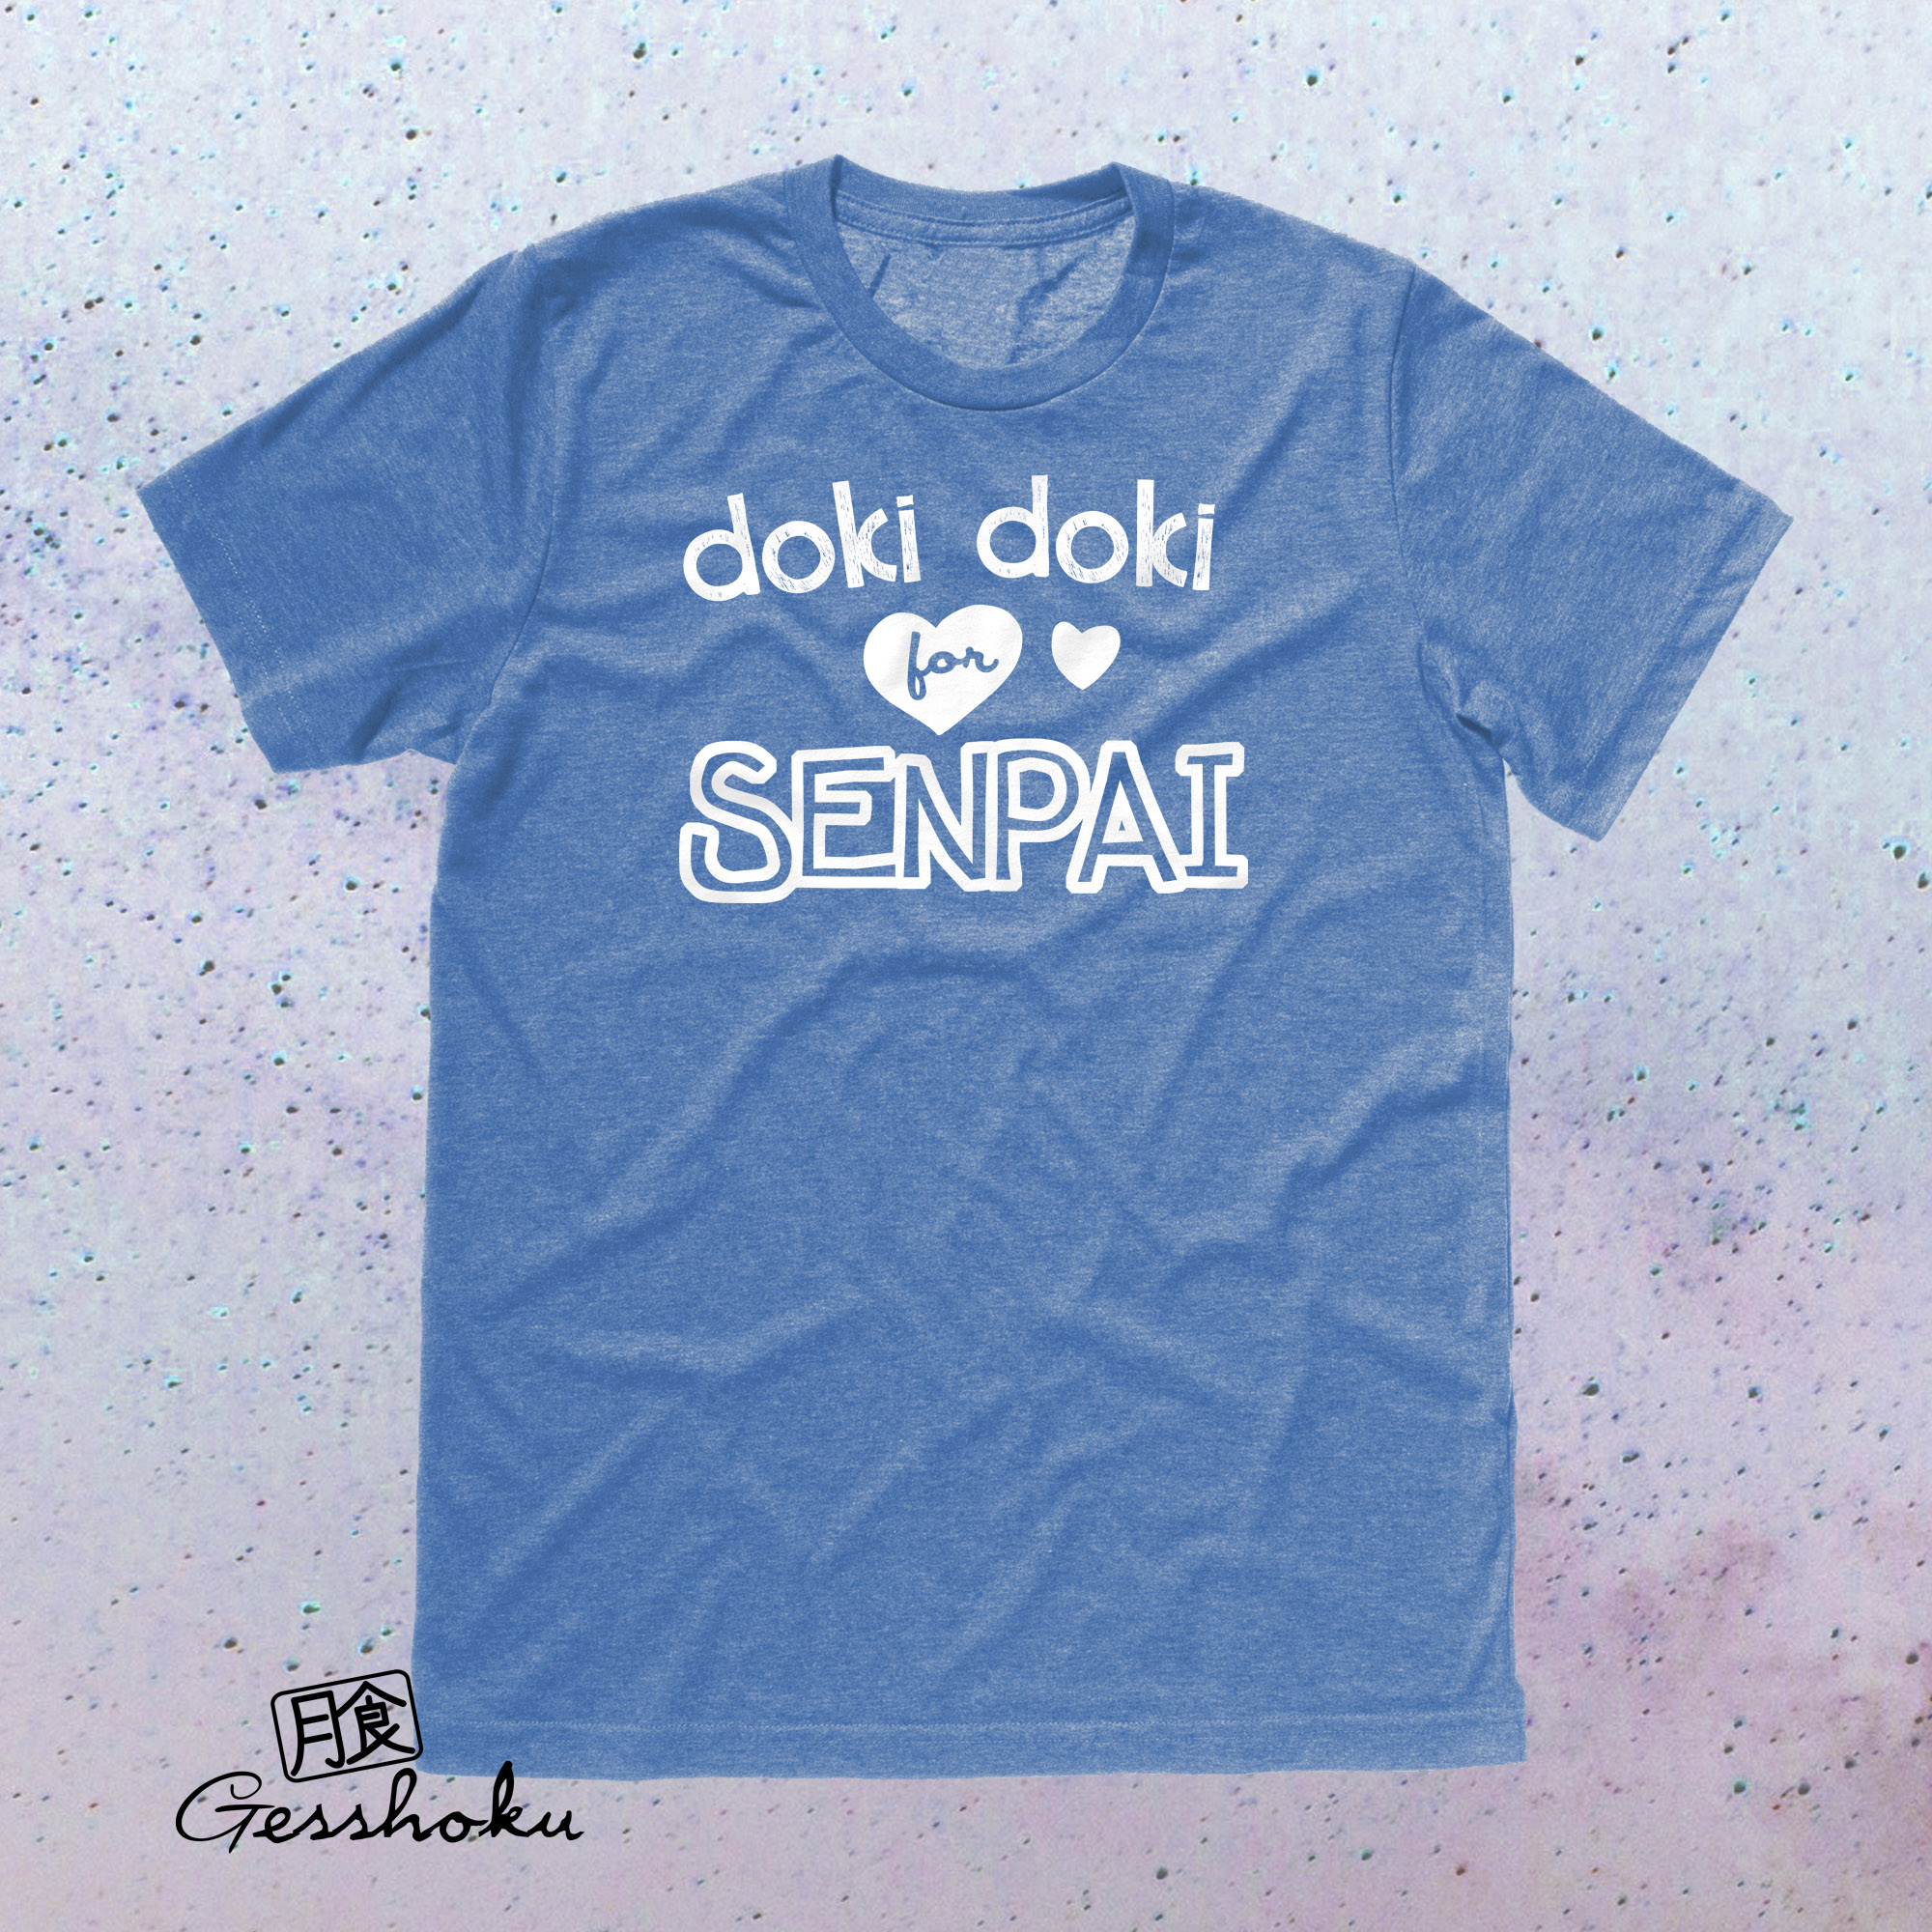 Doki Doki for Senpai T-shirt - Heather Royal Blue